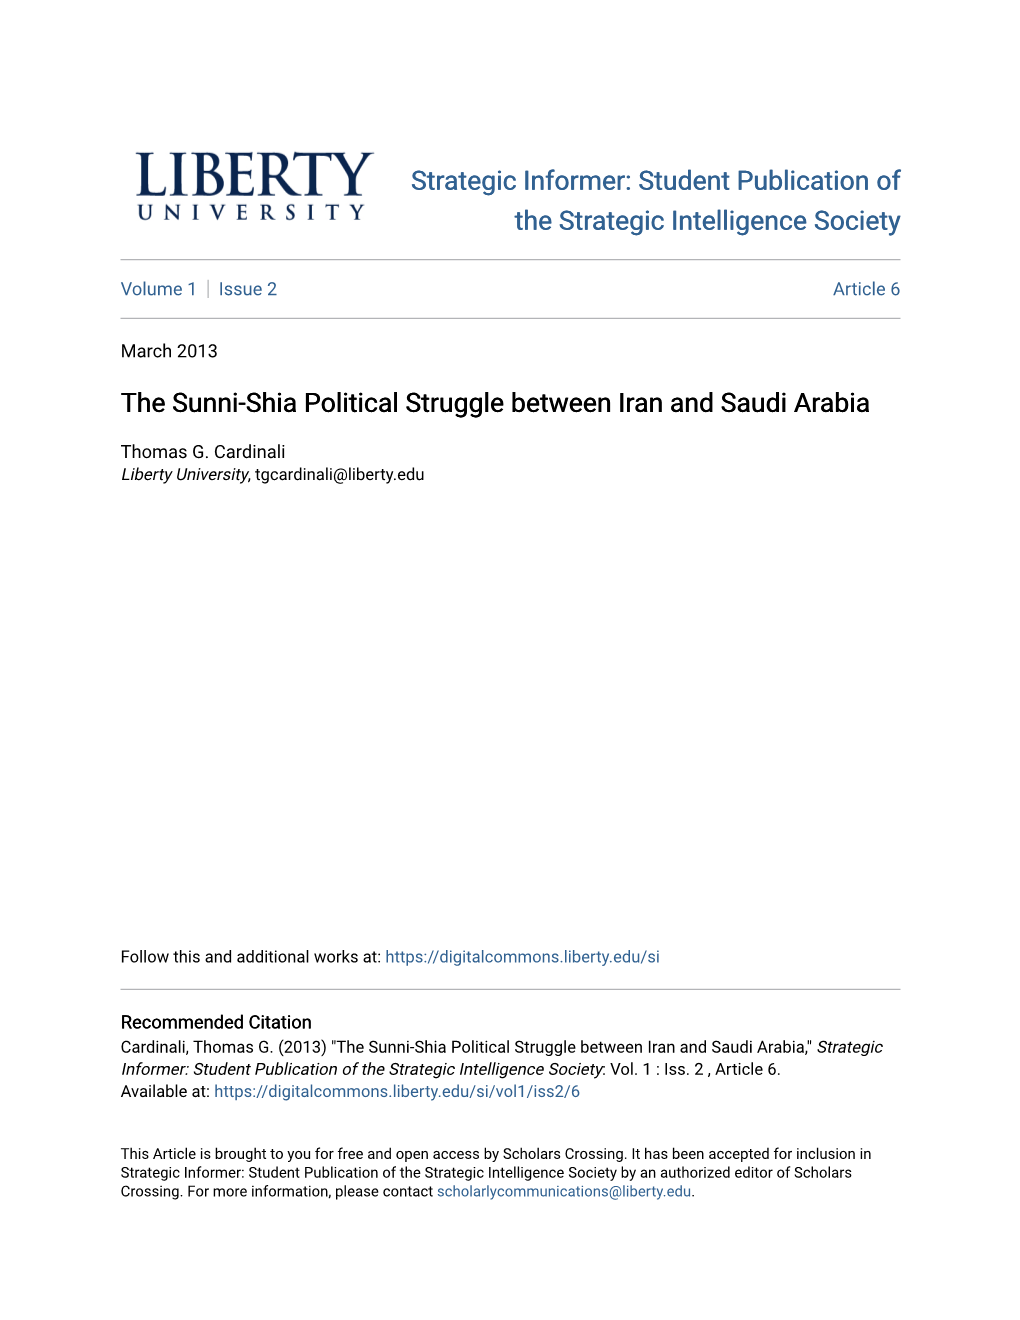 The Sunni-Shia Political Struggle Between Iran and Saudi Arabia